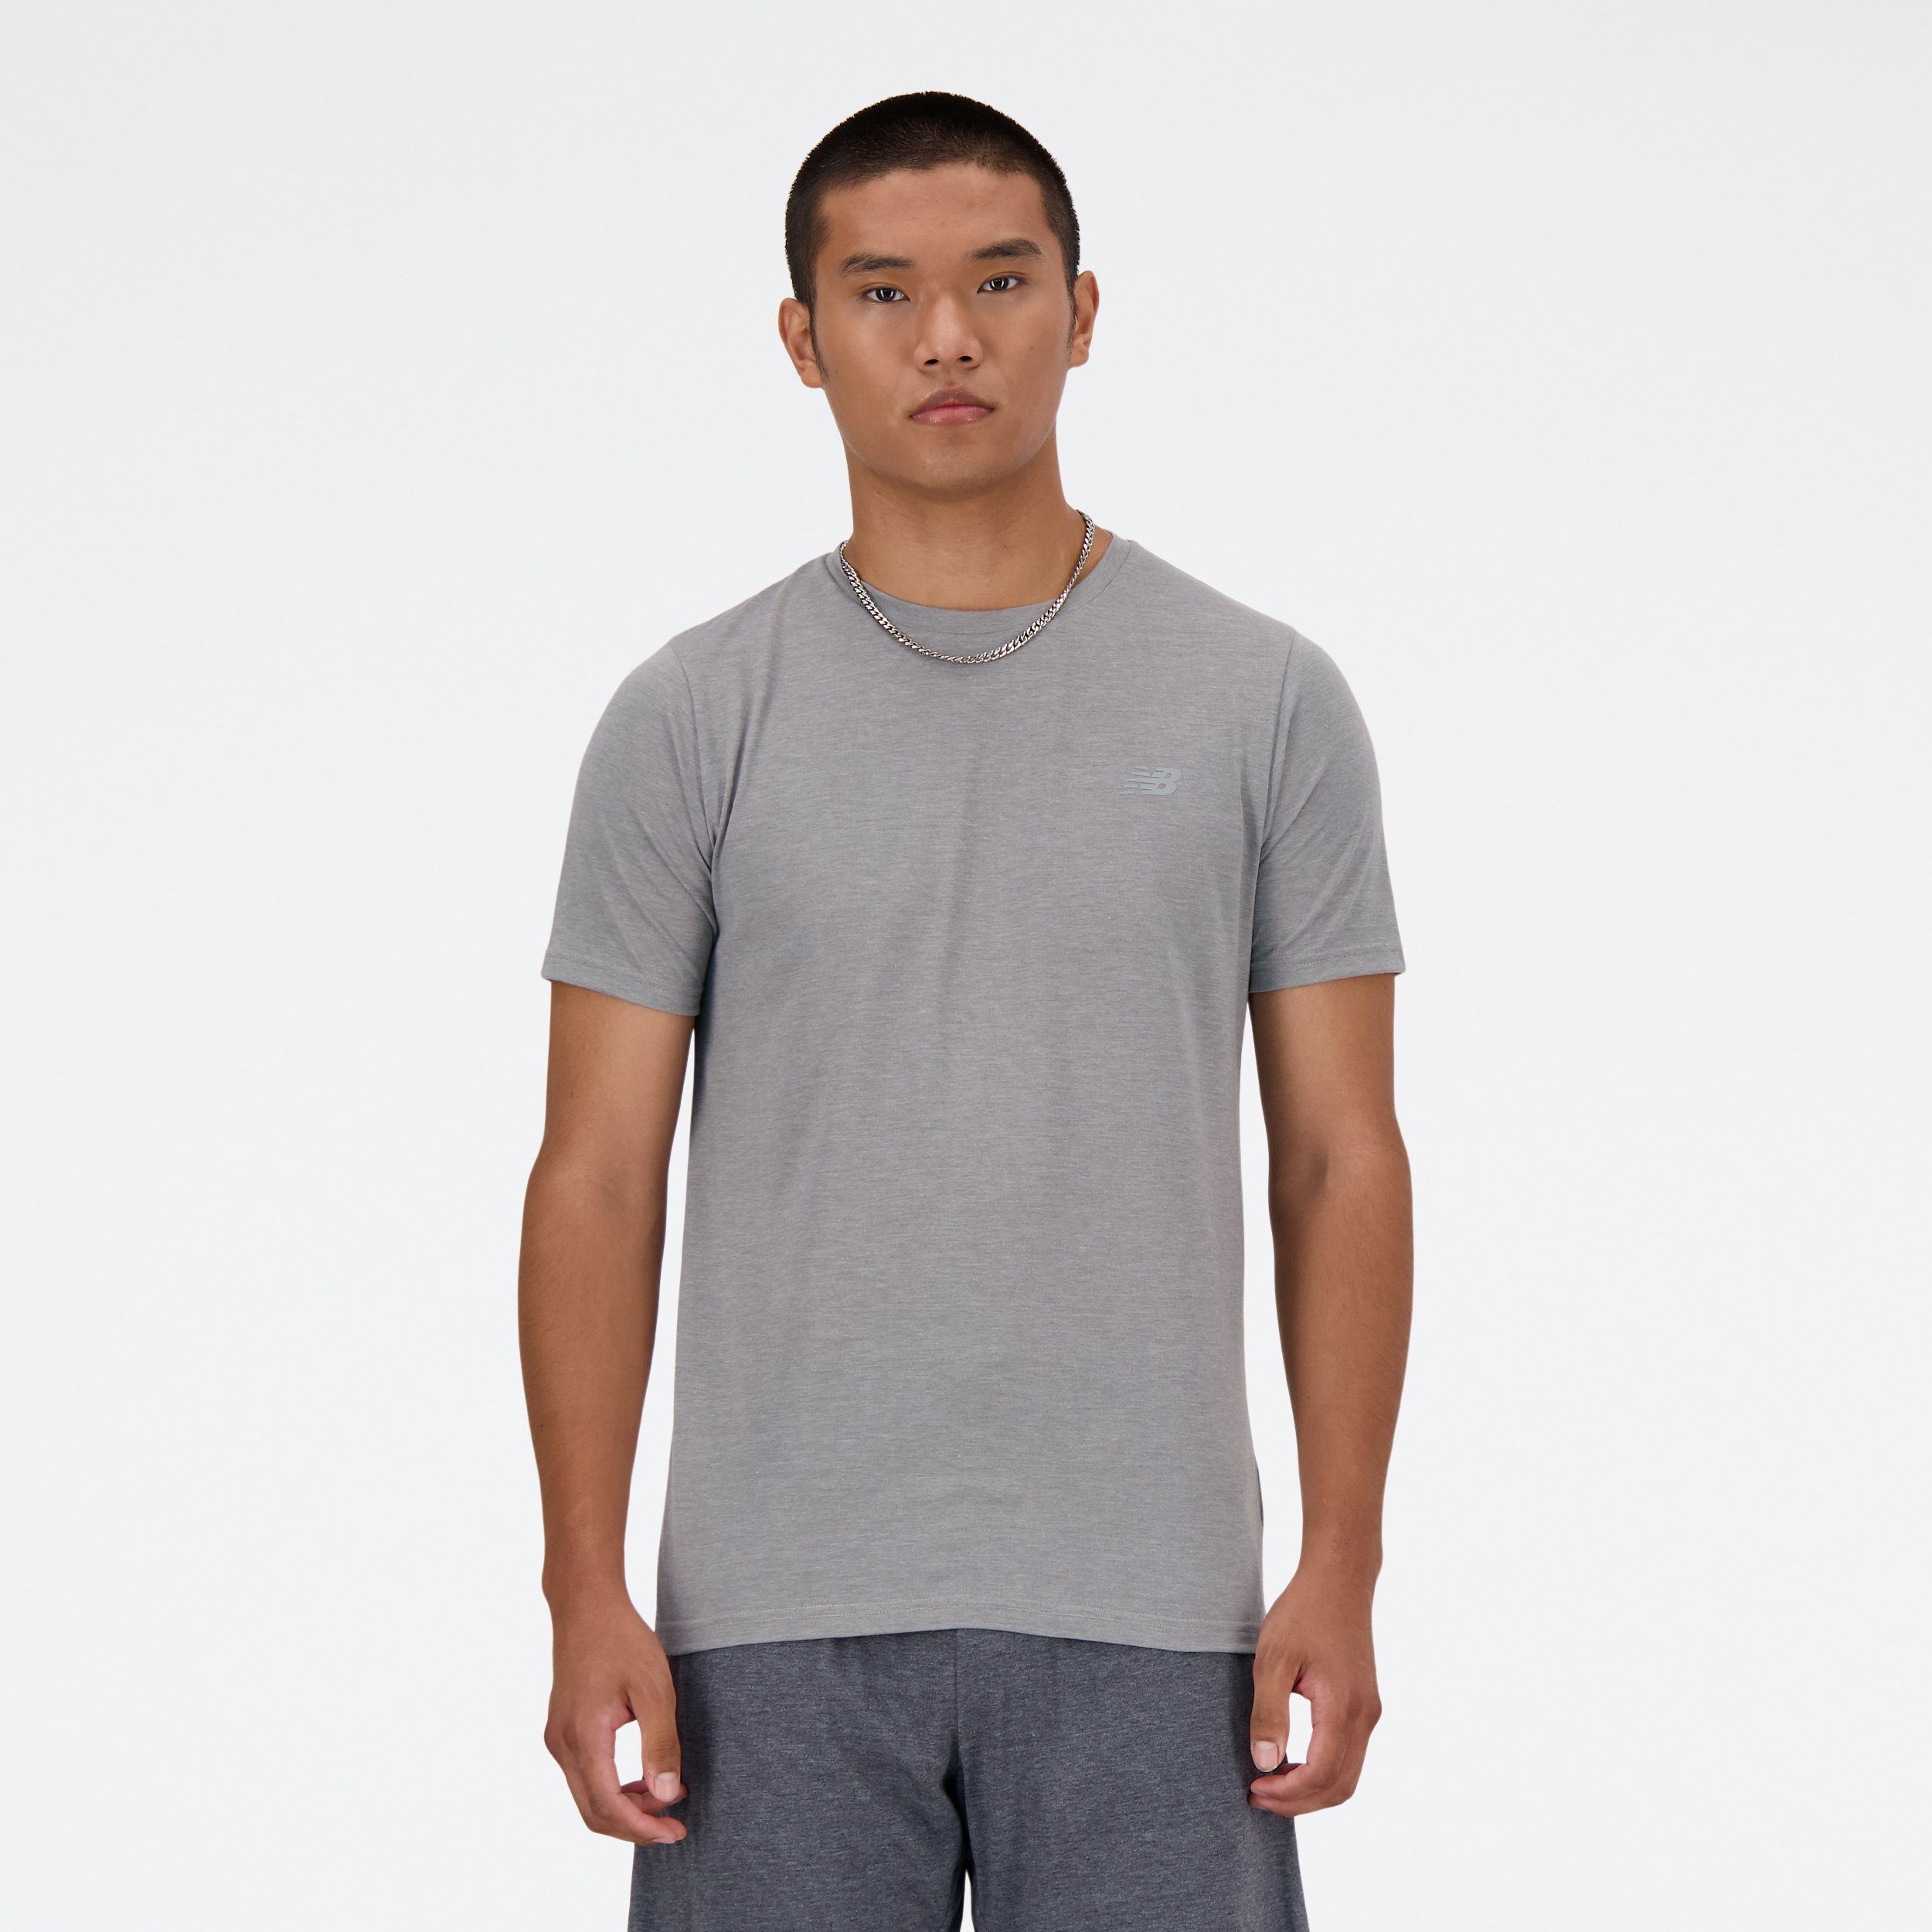 New Balance T-shirt MENS TRAINING S/S TOP